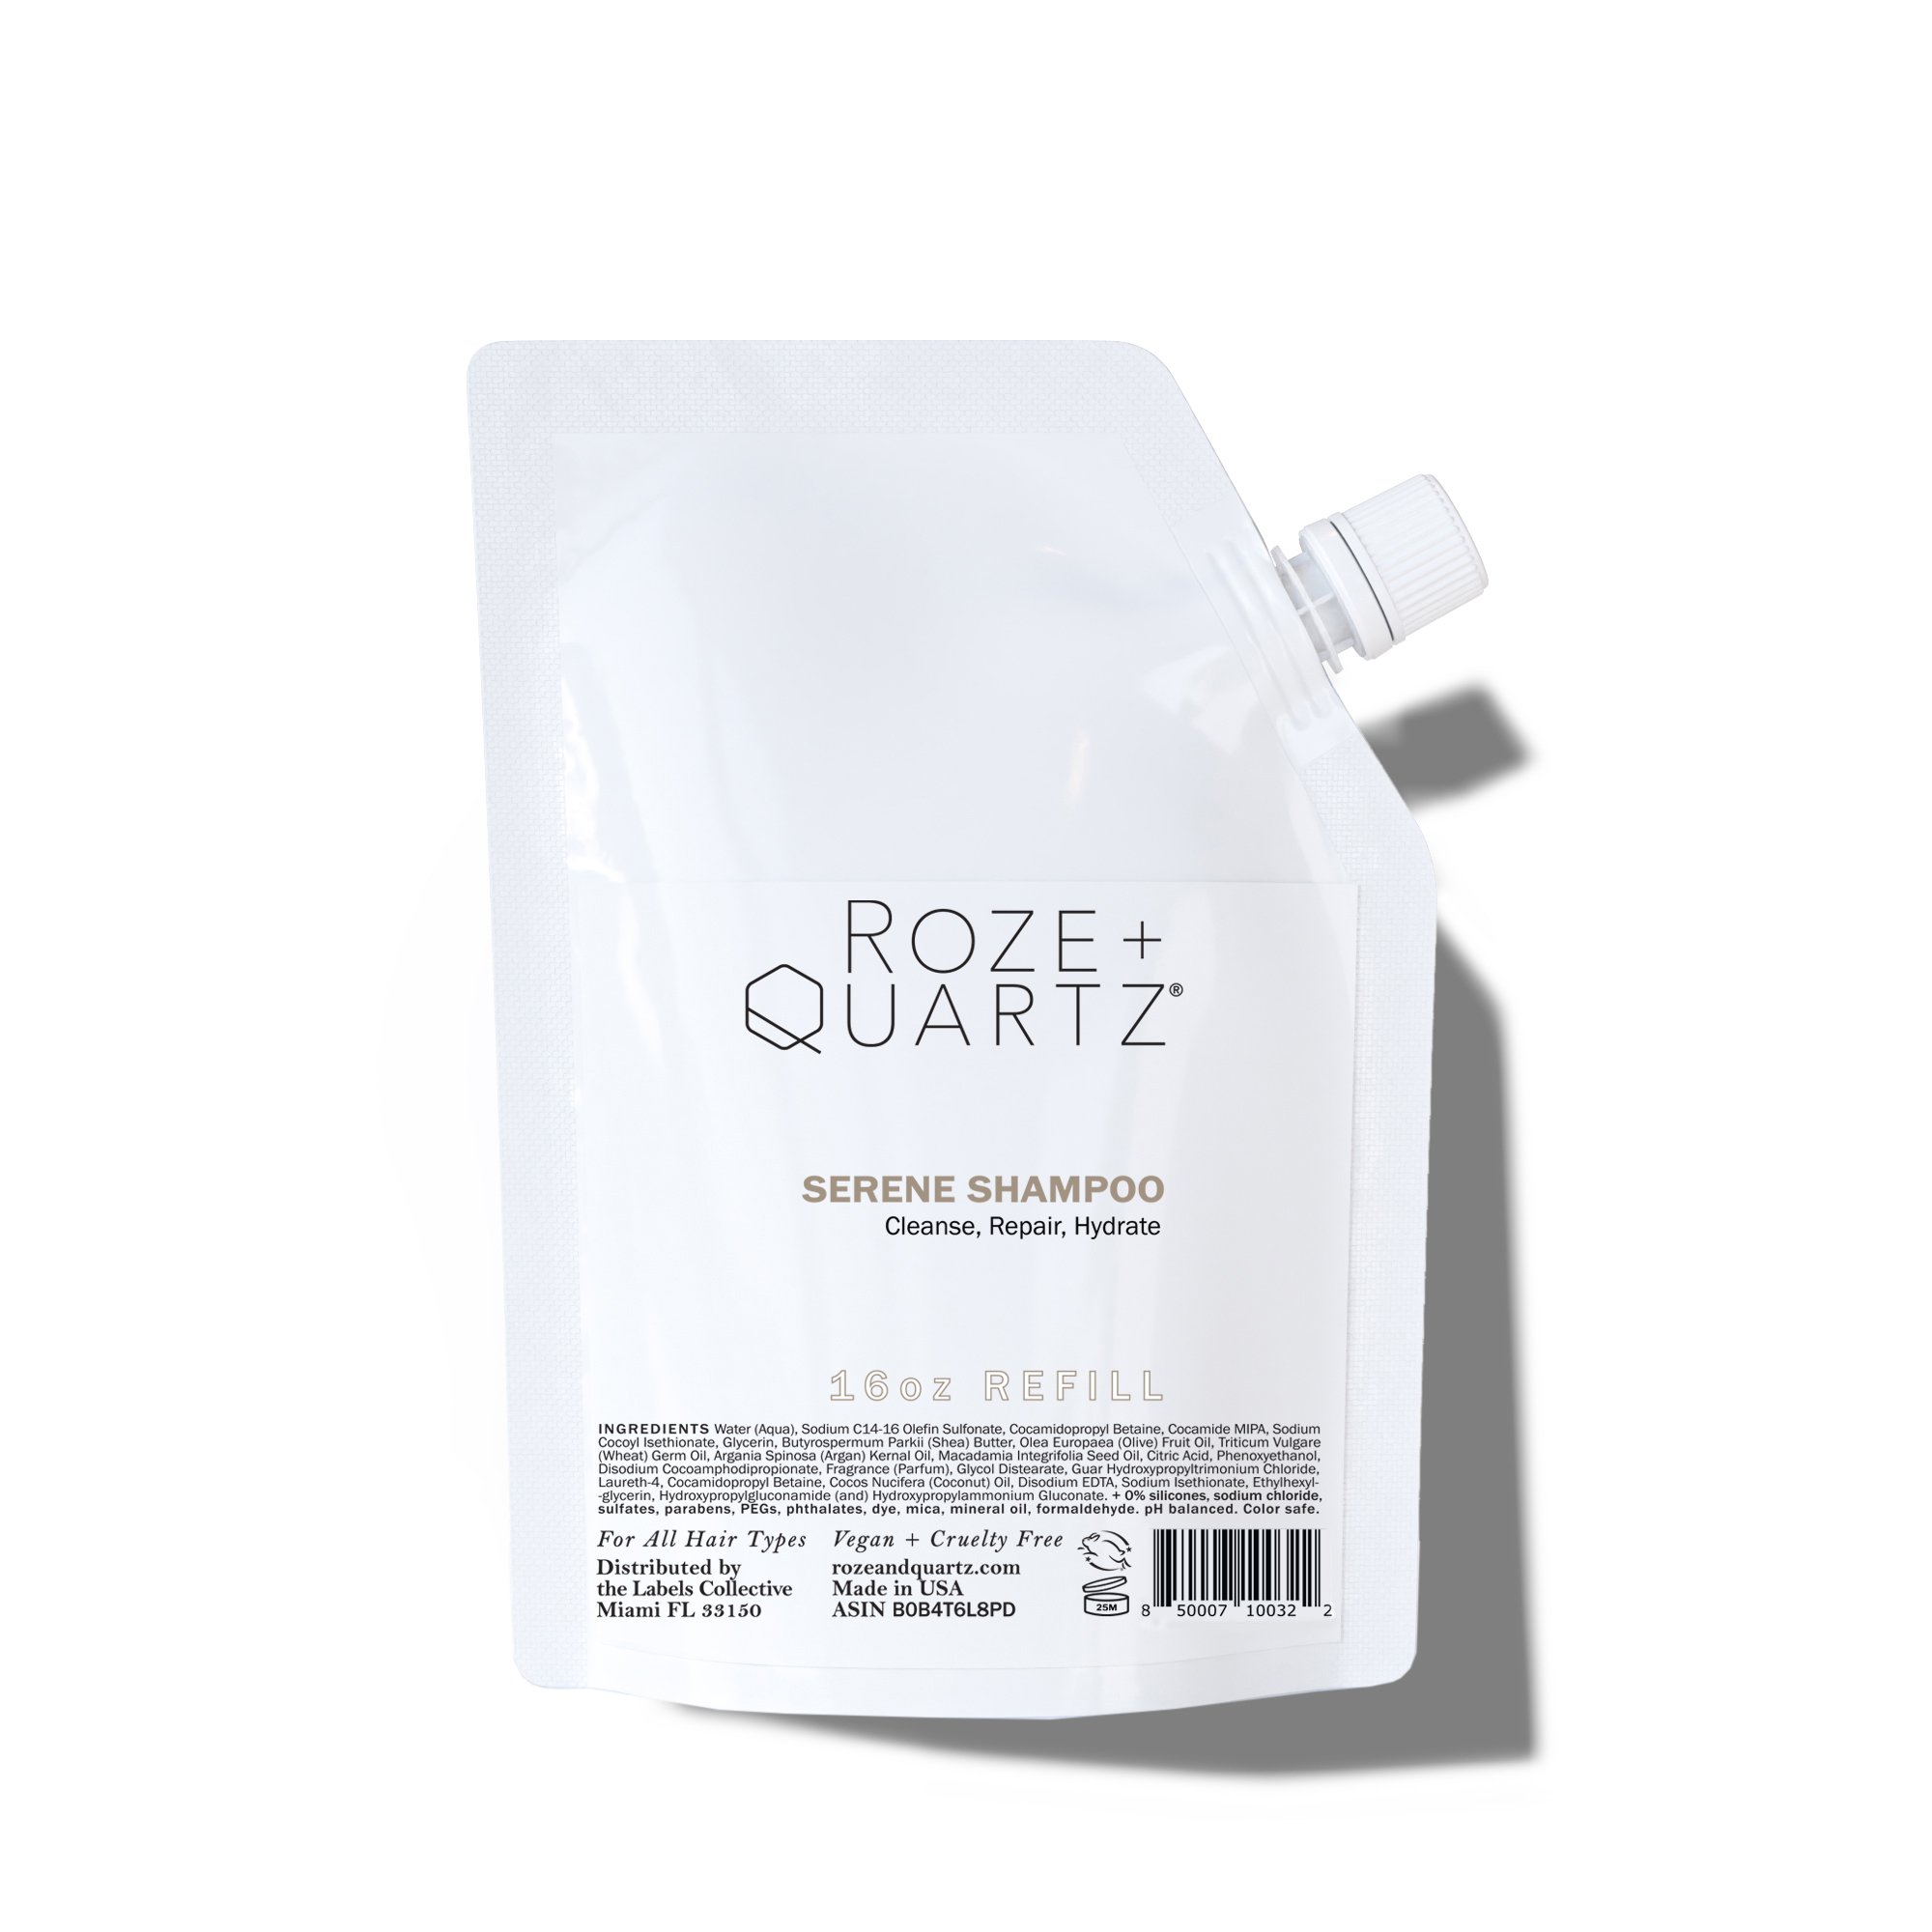 Roze + Quartz Serene Shampoo REFILL 16oz_SHADOW.jpg